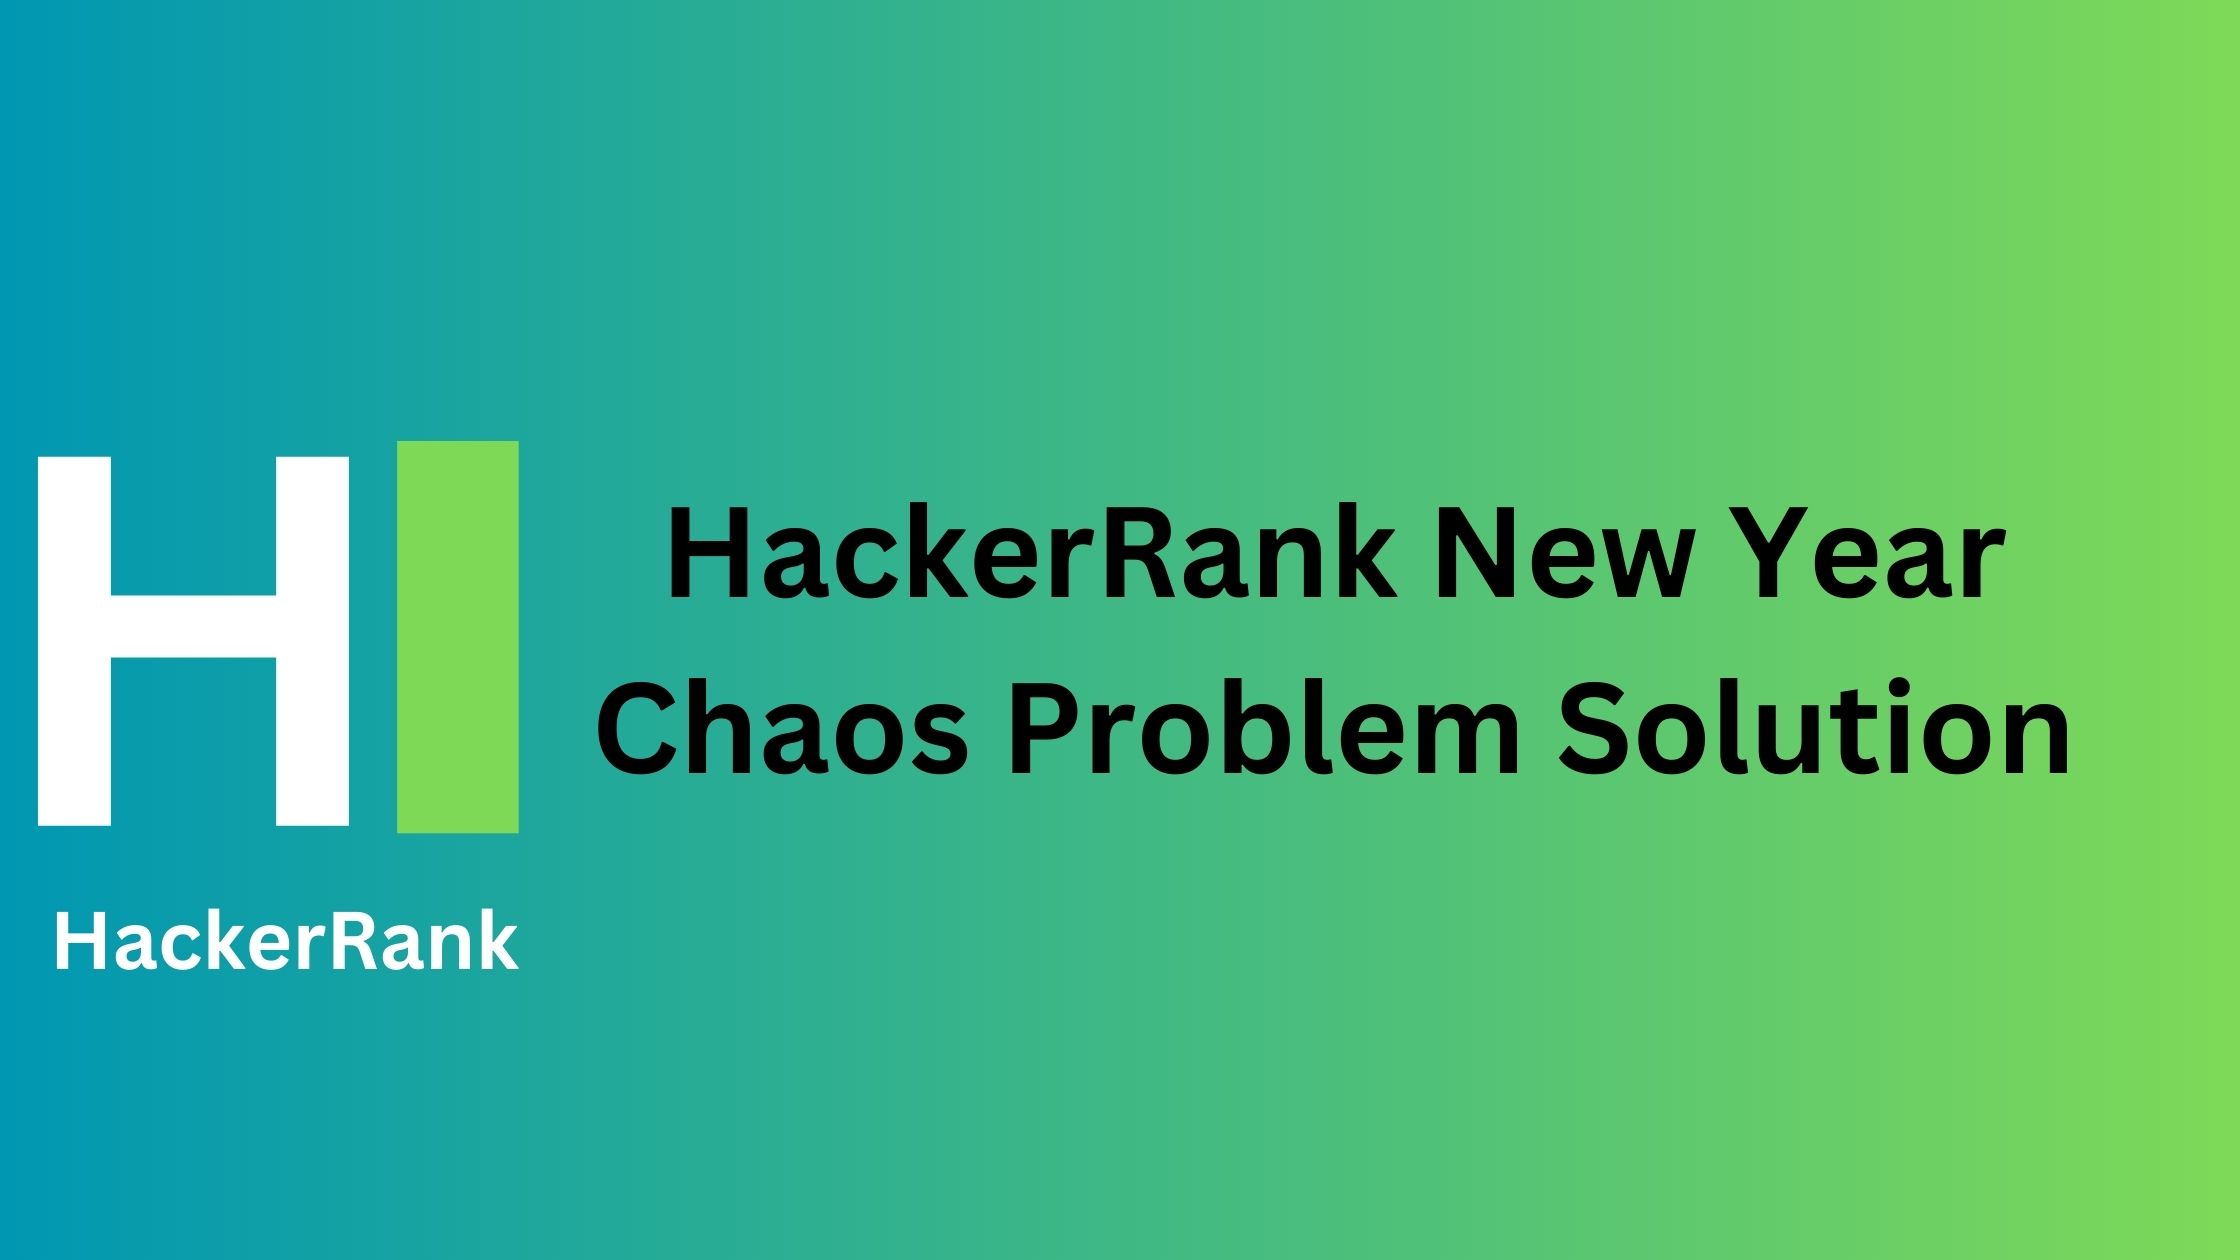 HackerRank New Year Chaos Problem Solution